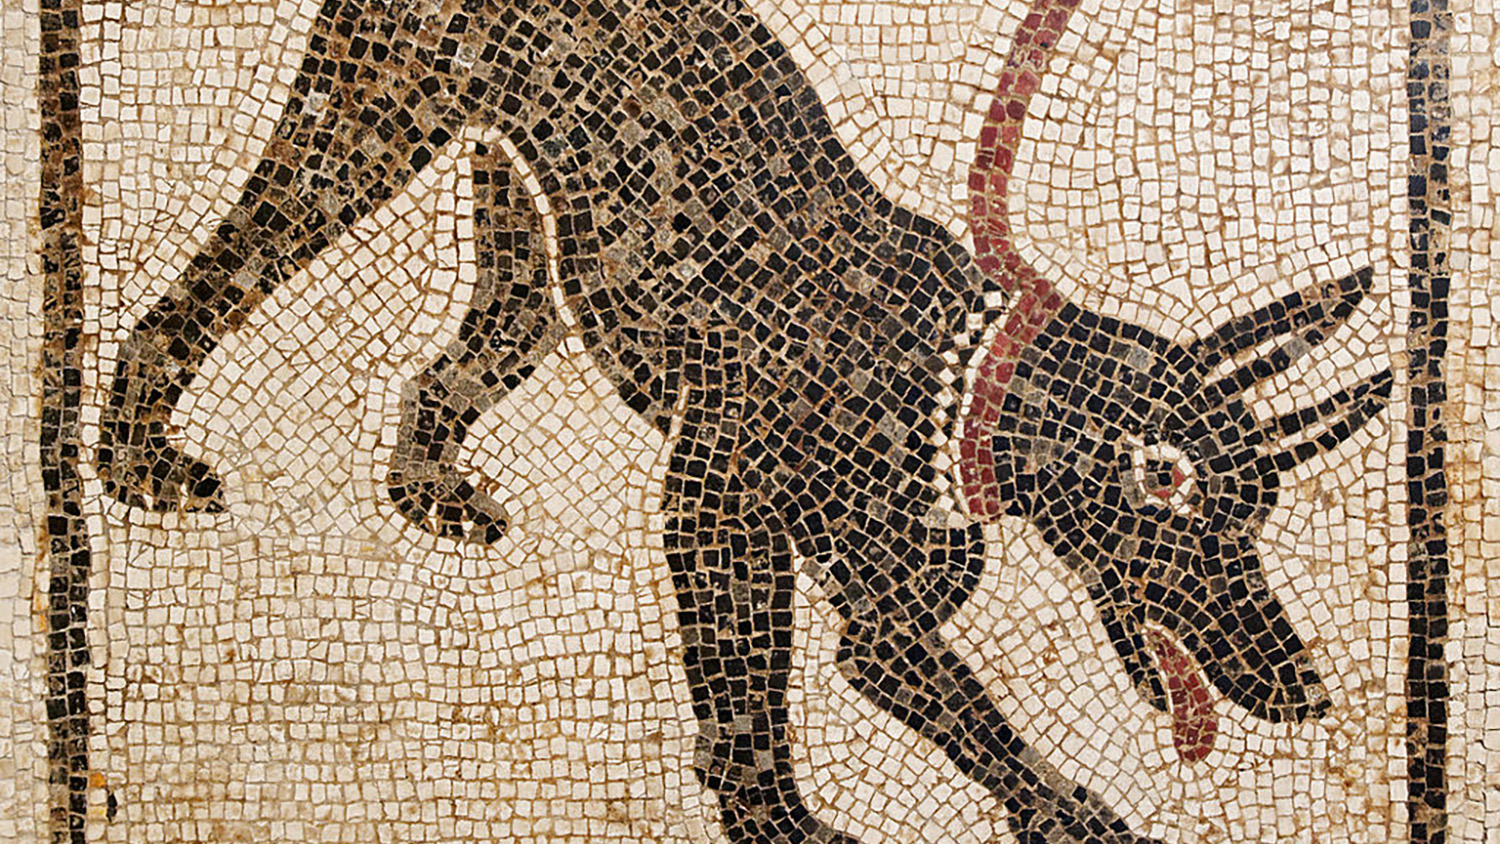 A mosaic of a dog.